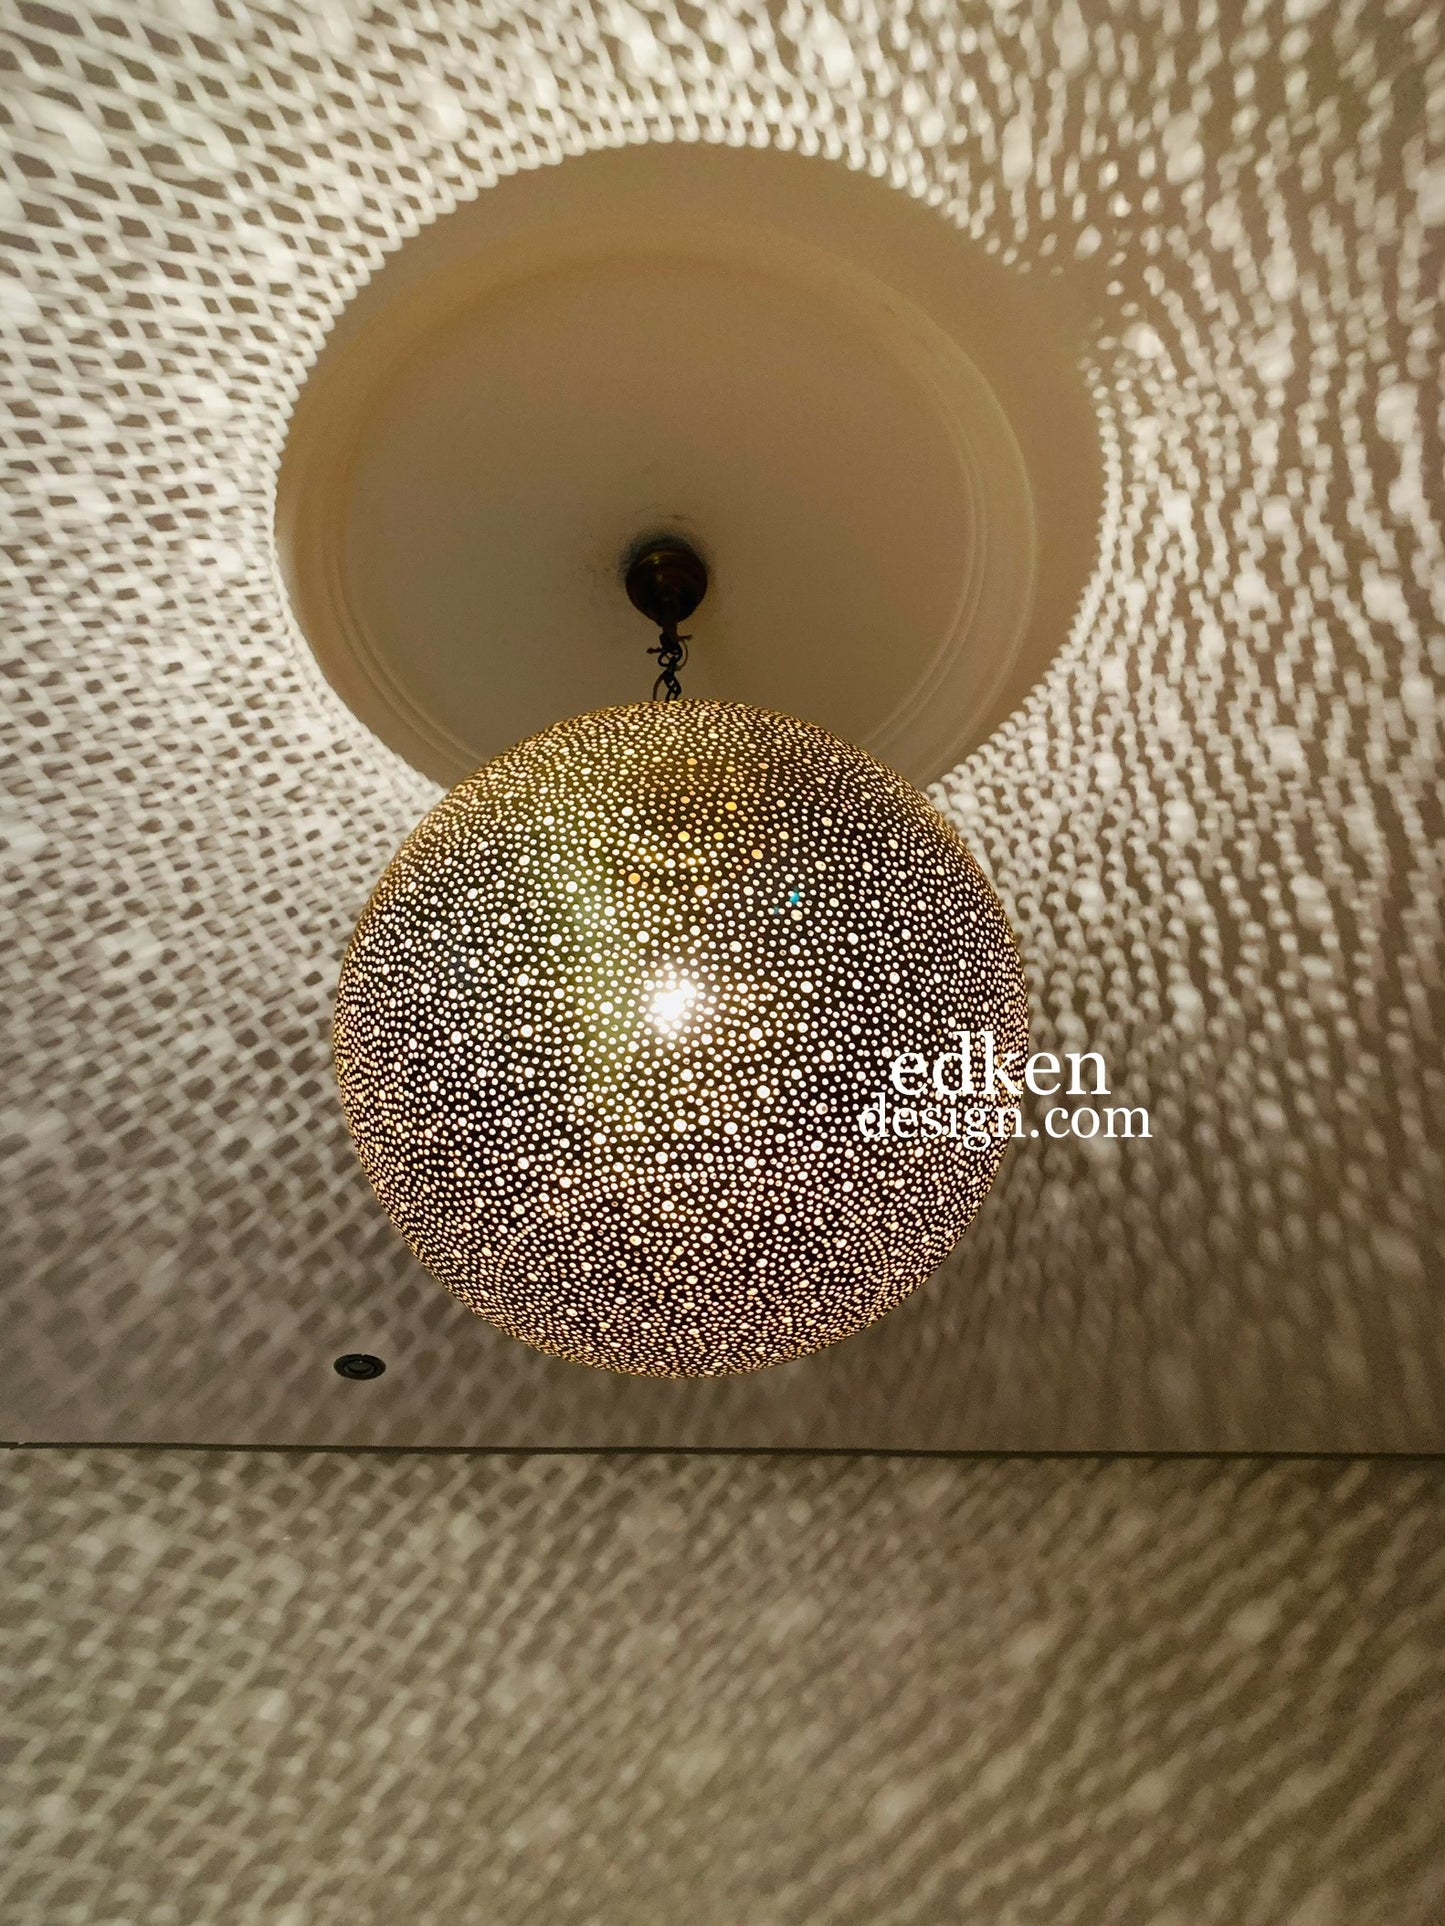 EDKEN LIGHTS - Side View Morocco Ceiling Lamp Shades Globe Shape Fixture Ball pierced Hanging Lights 